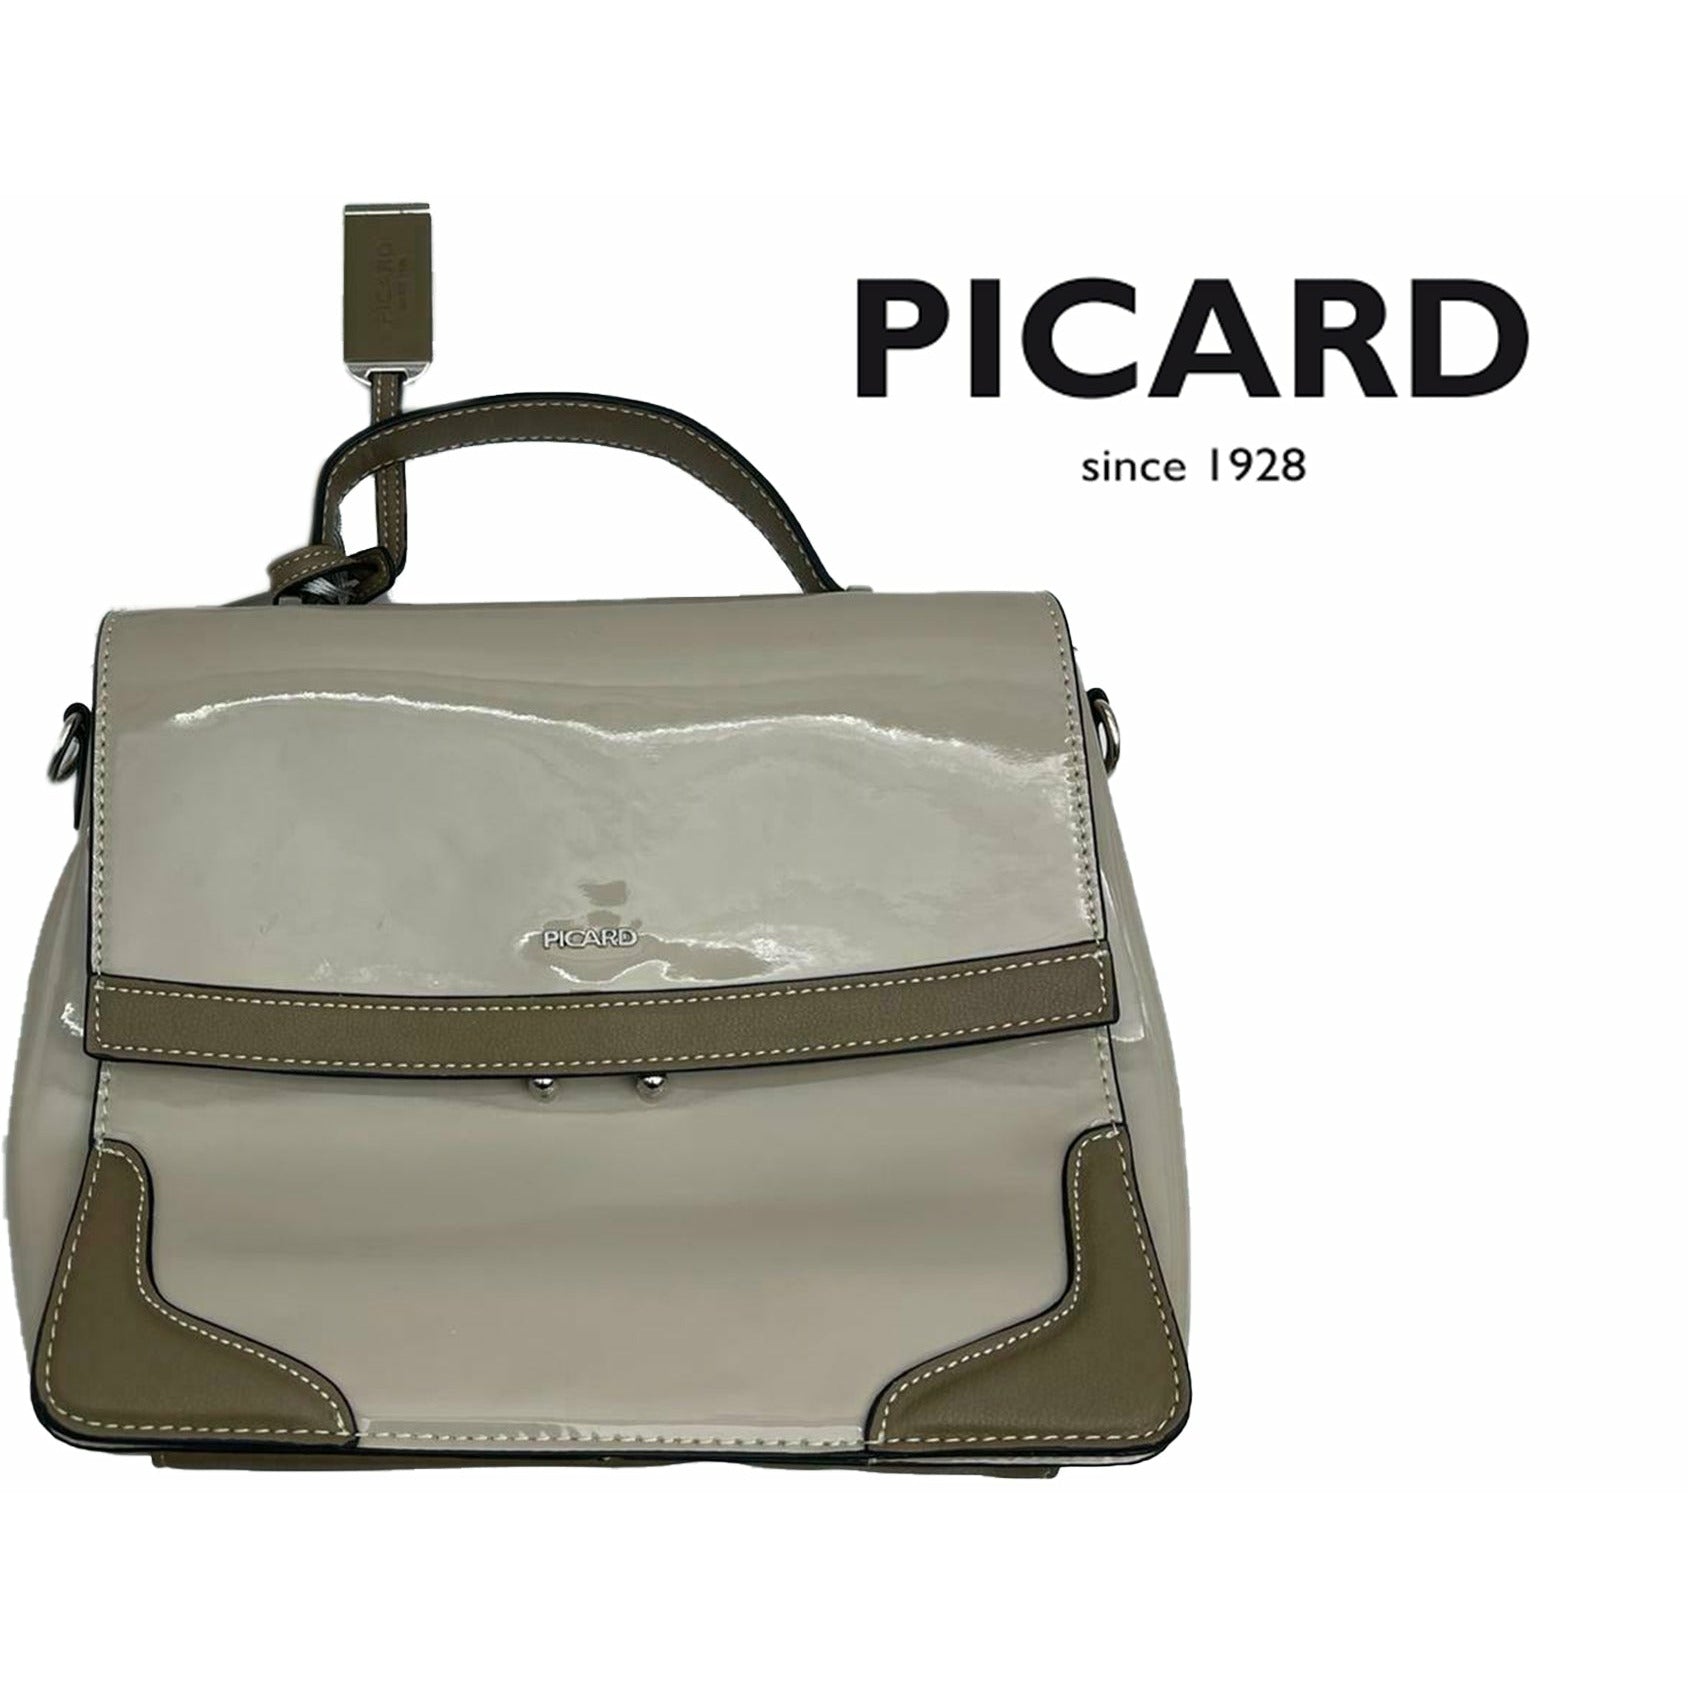 Picard Crossbody Handbags